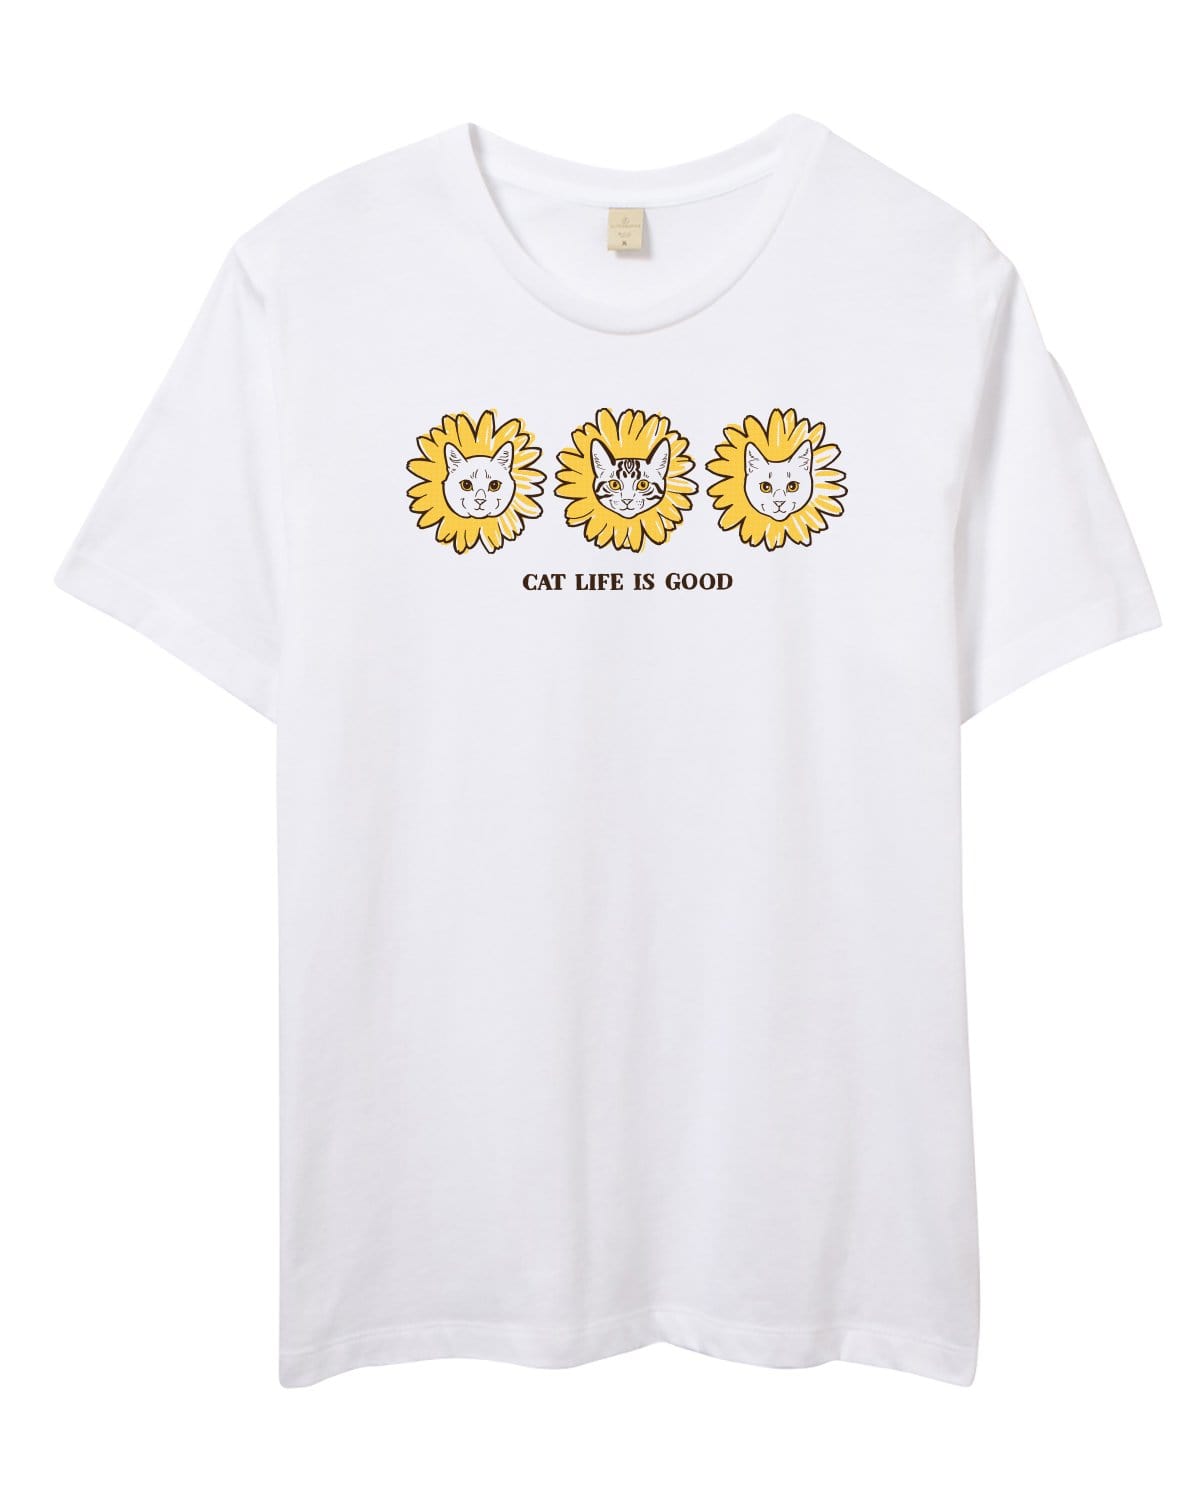 "Cat Life is Good" - Exclusive Limited Edition Cat Culture Unisex T-Shirt by Megan Lynn Kott